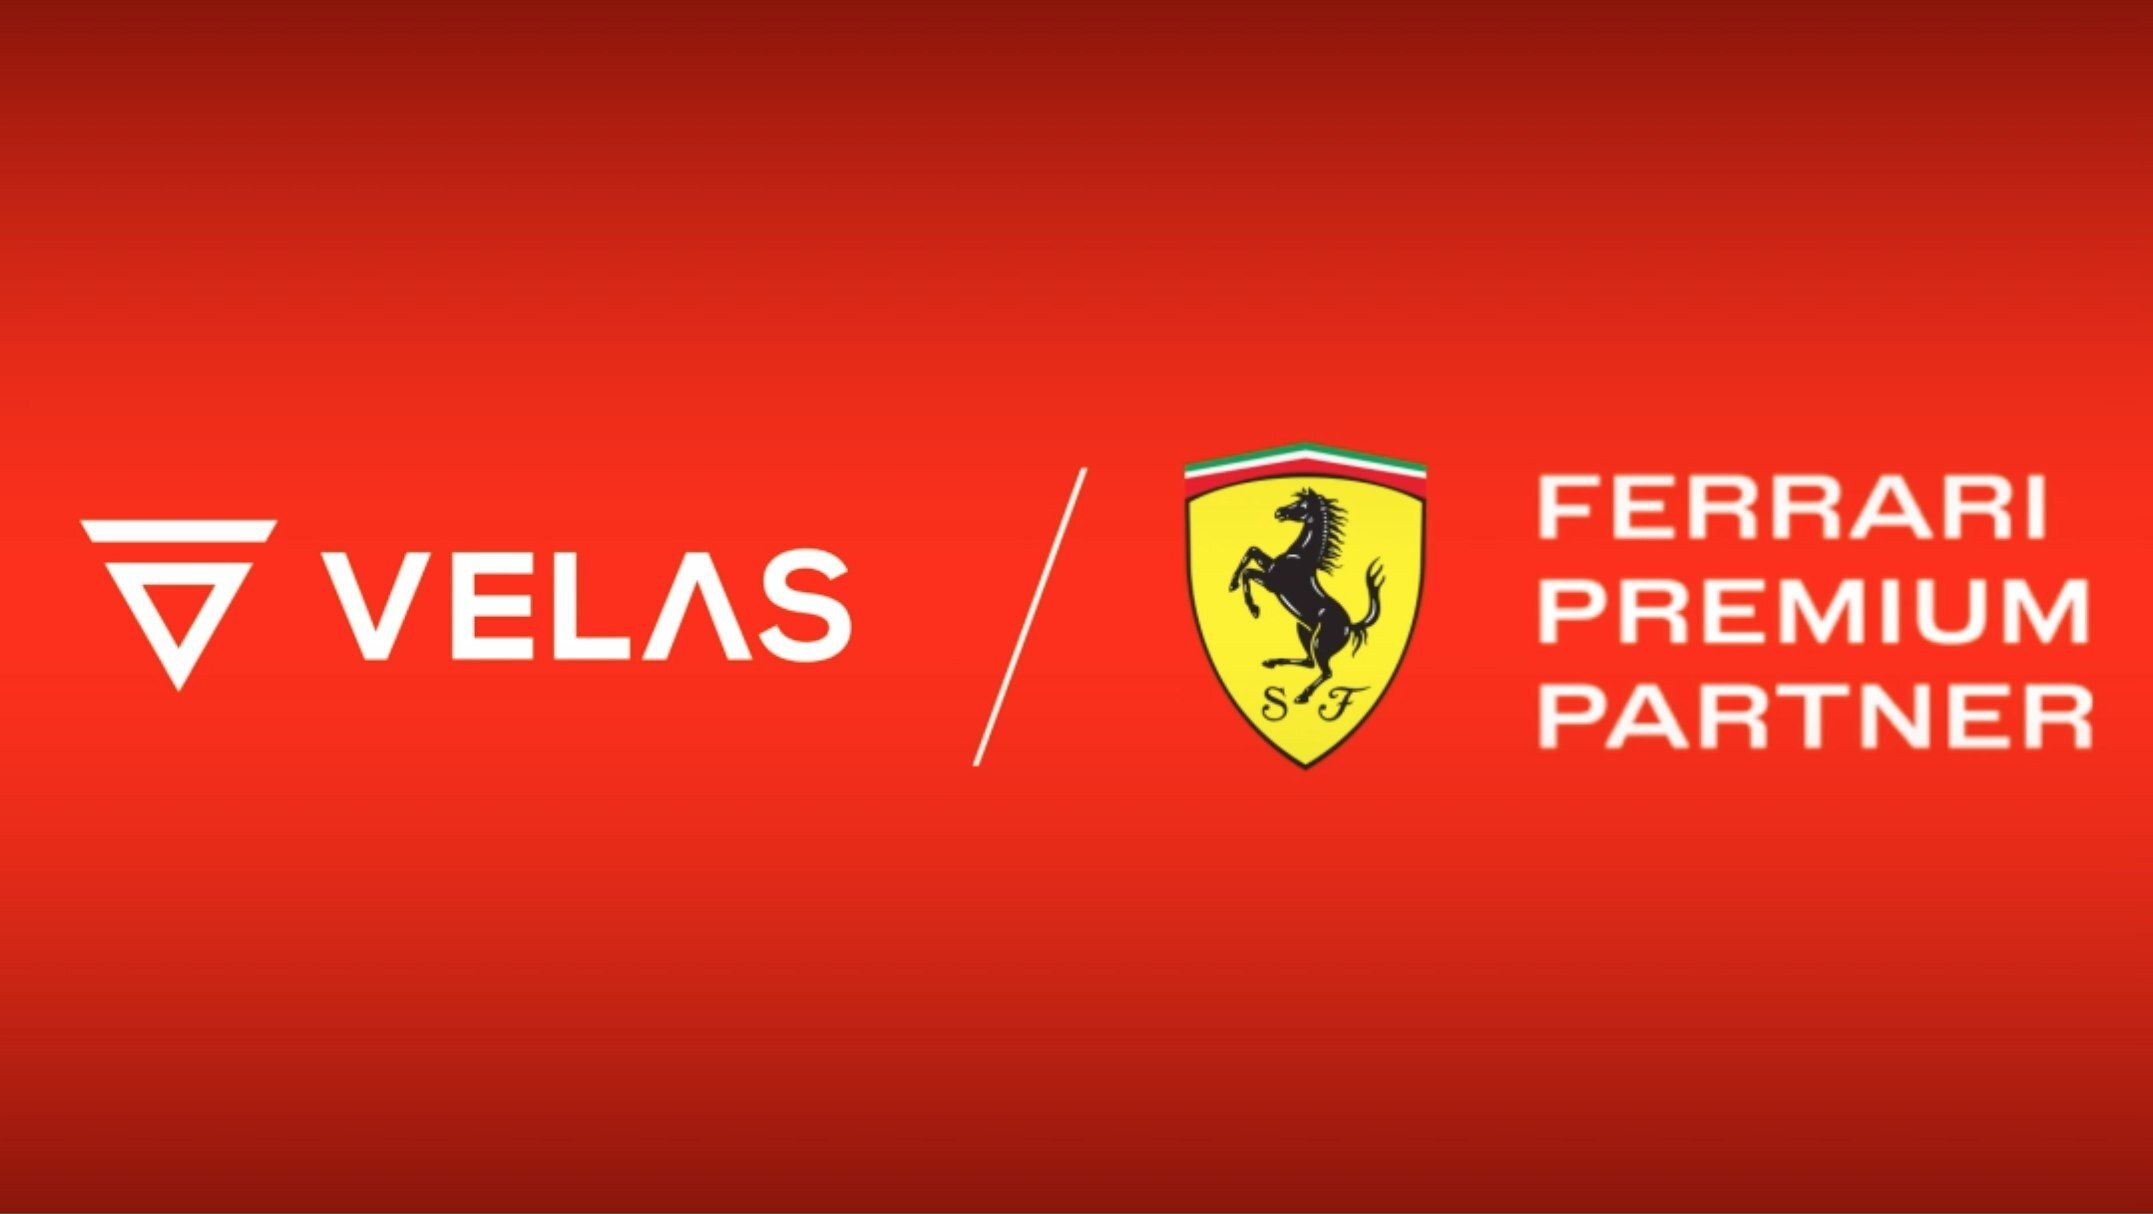 Velas Powers Into Formula-1 With Multi-Year Scuderia Ferrari Partnership